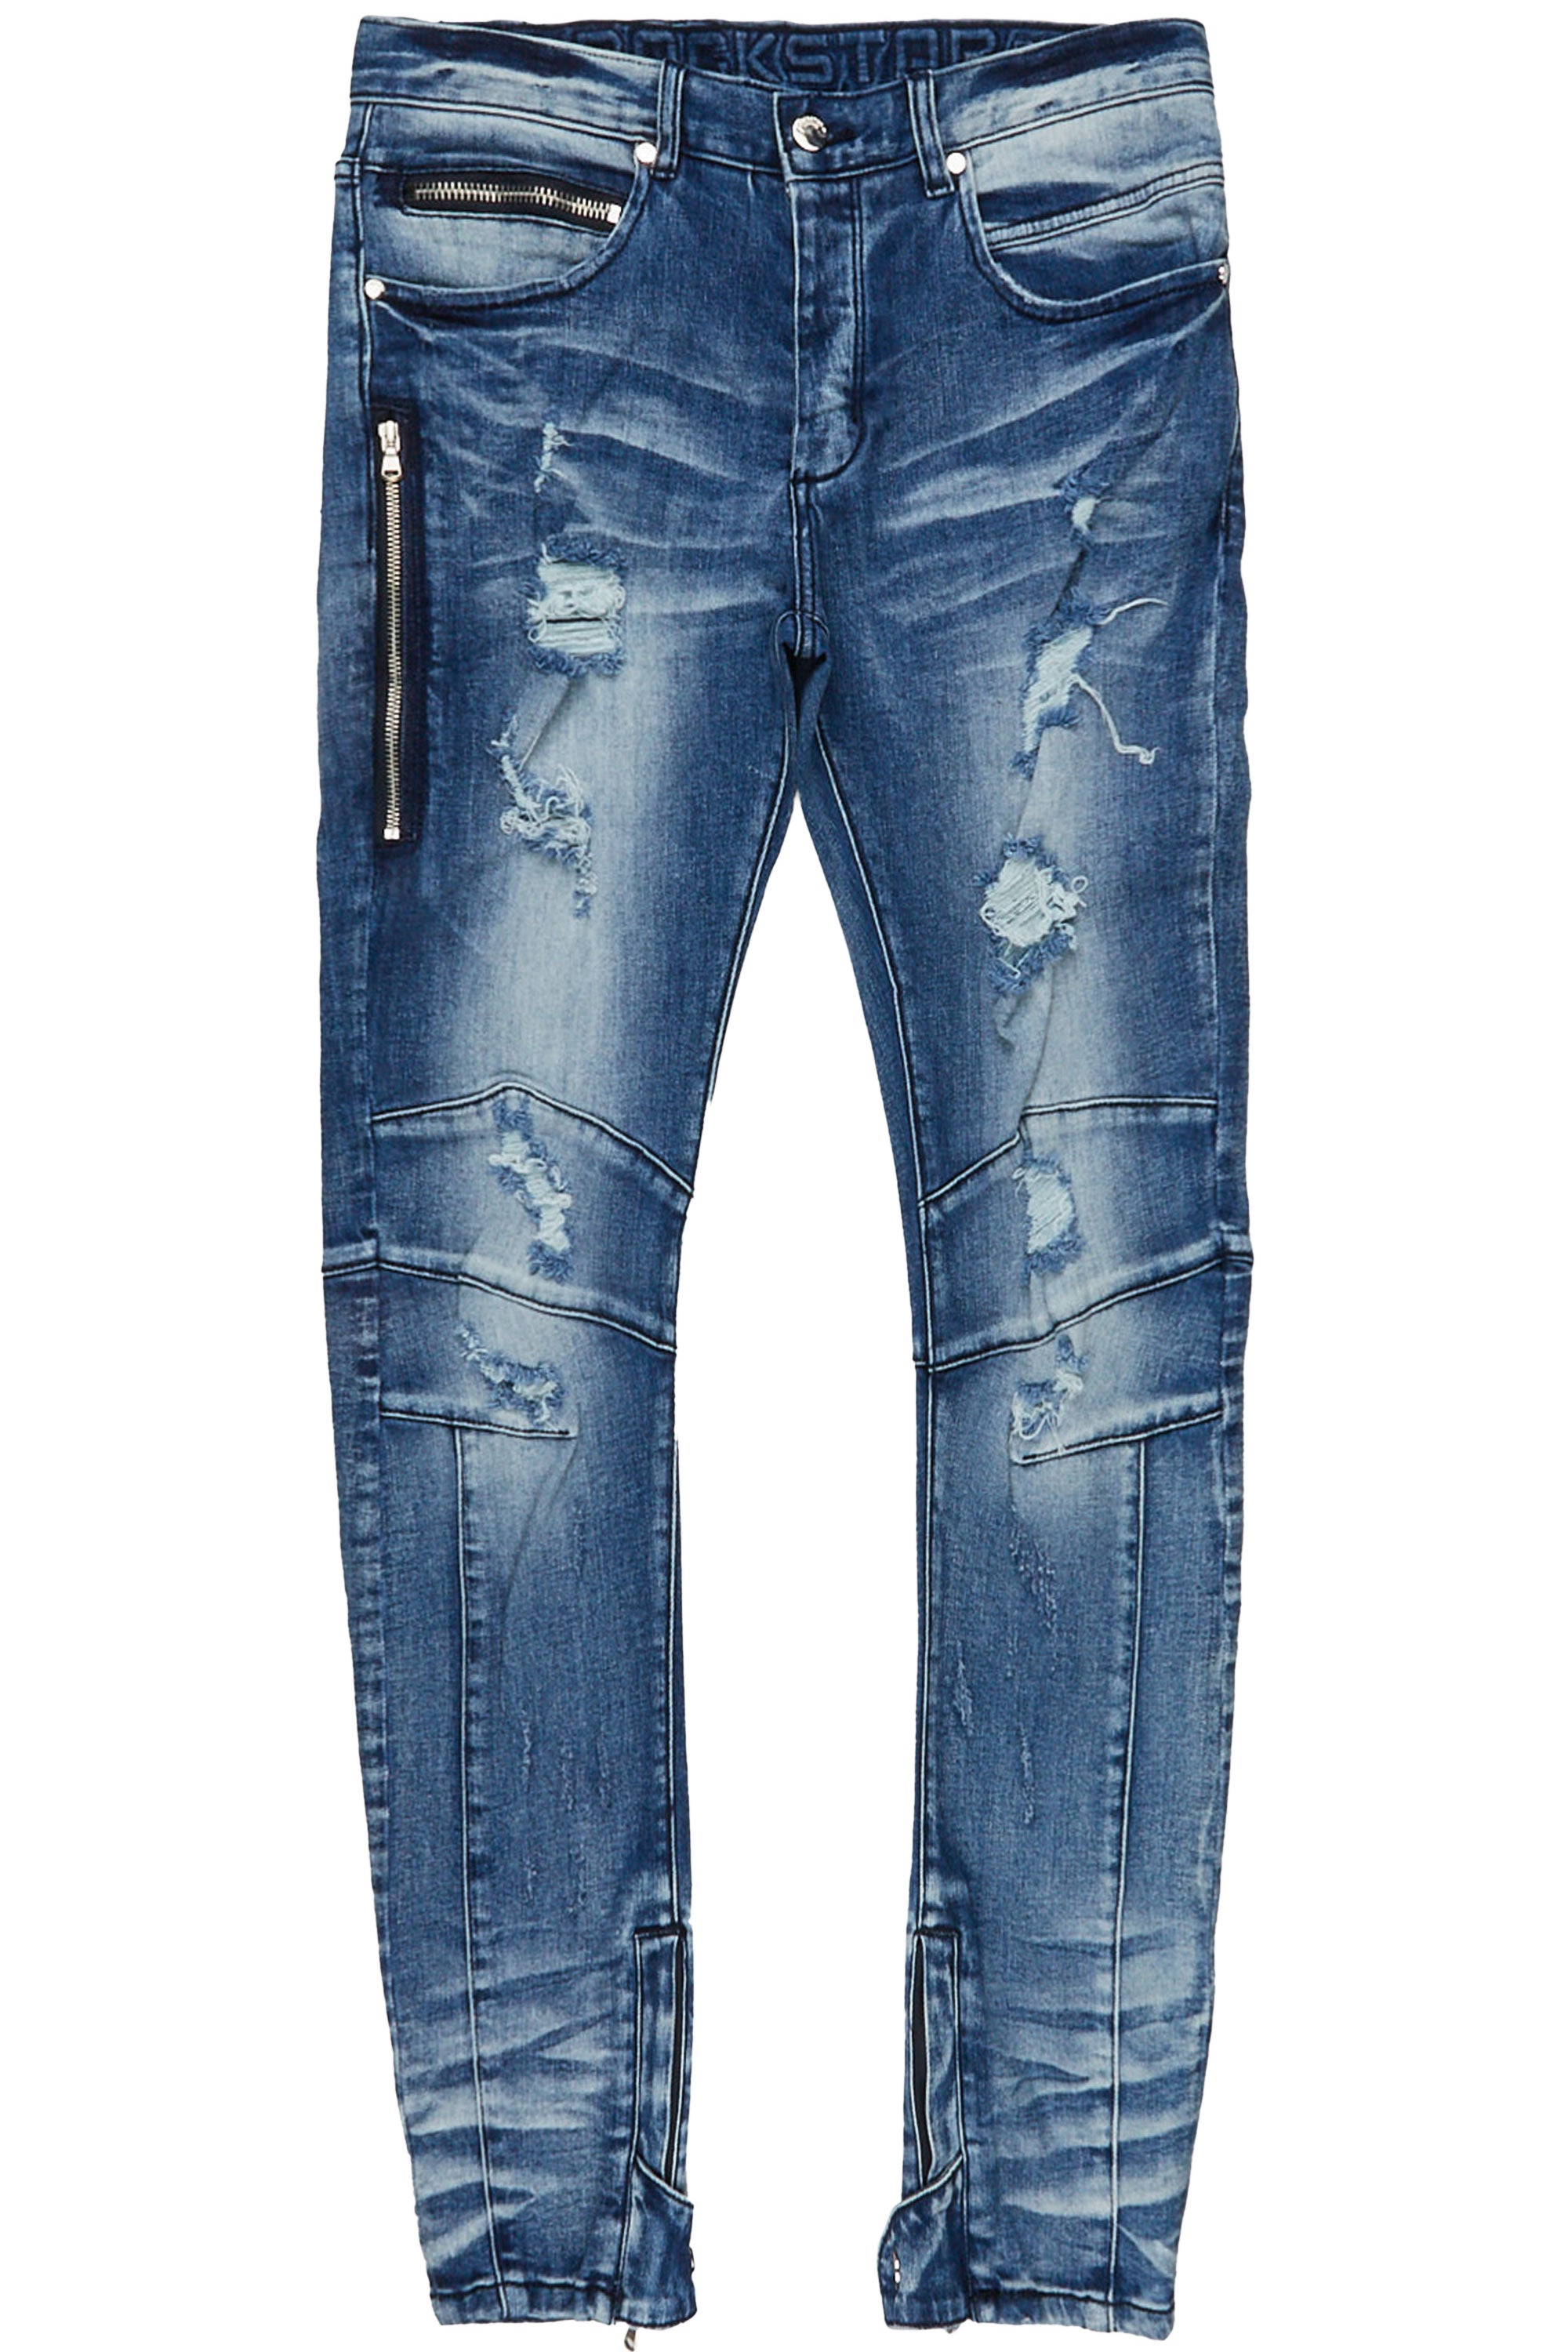 Nestor Blue 5 Pocket Skinny Jean